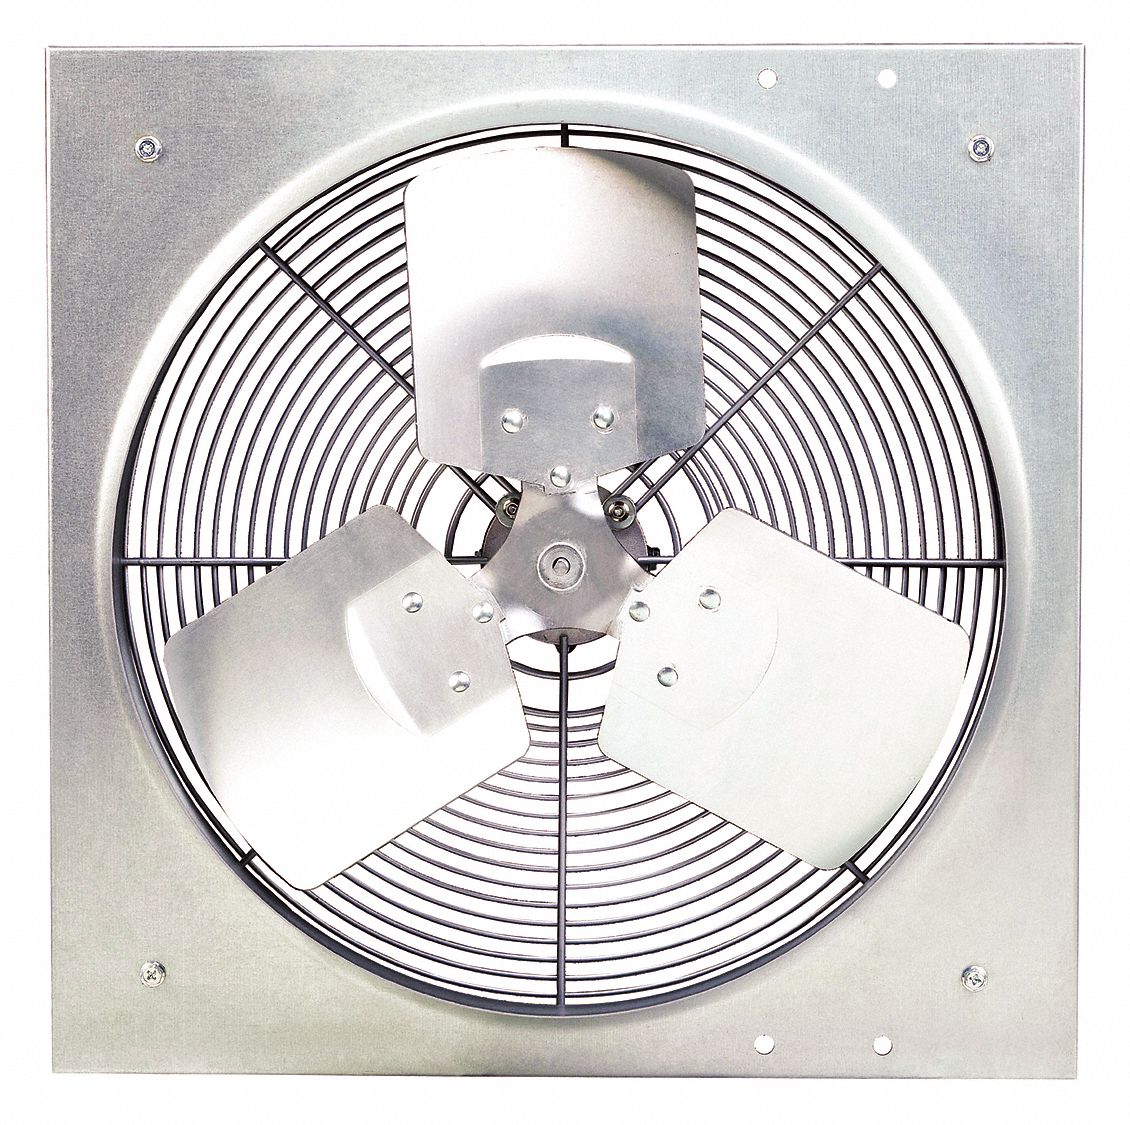 DAYTON Exhaust Fans and Ventilation Fans - Grainger Industrial Supply